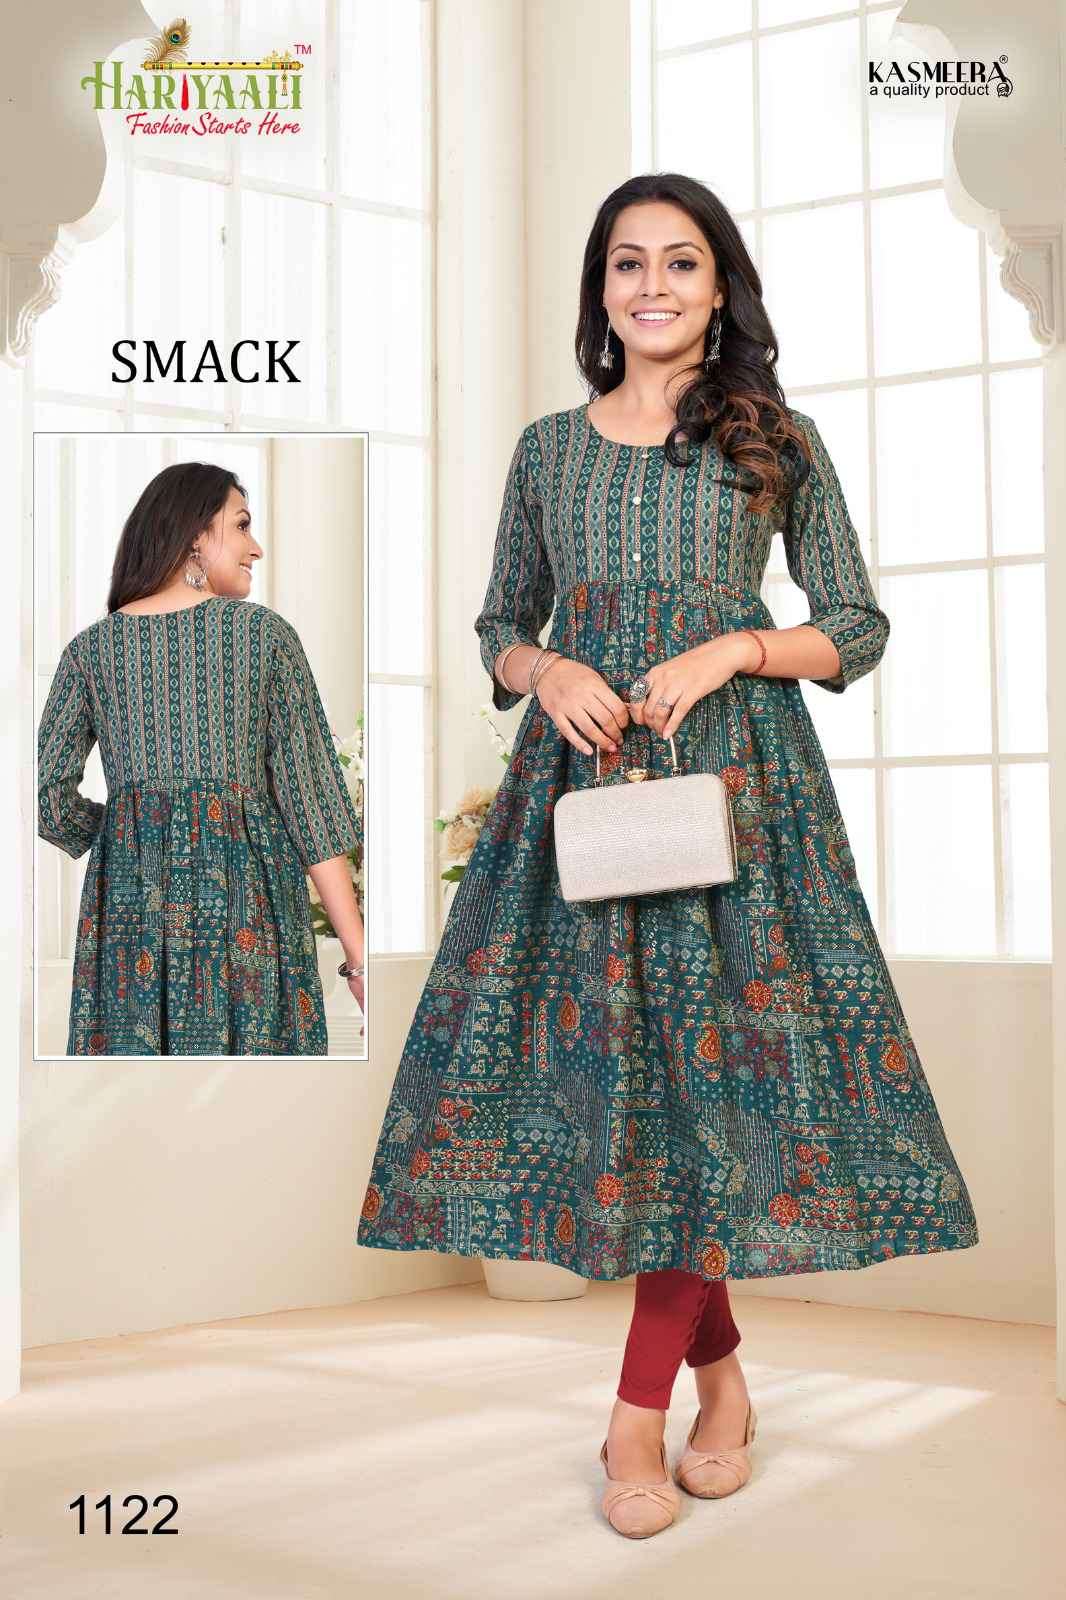 Hariyaali Smack Vol 11 Fancy Flair Pattern Kurti Combo Designs Outfit Supplier